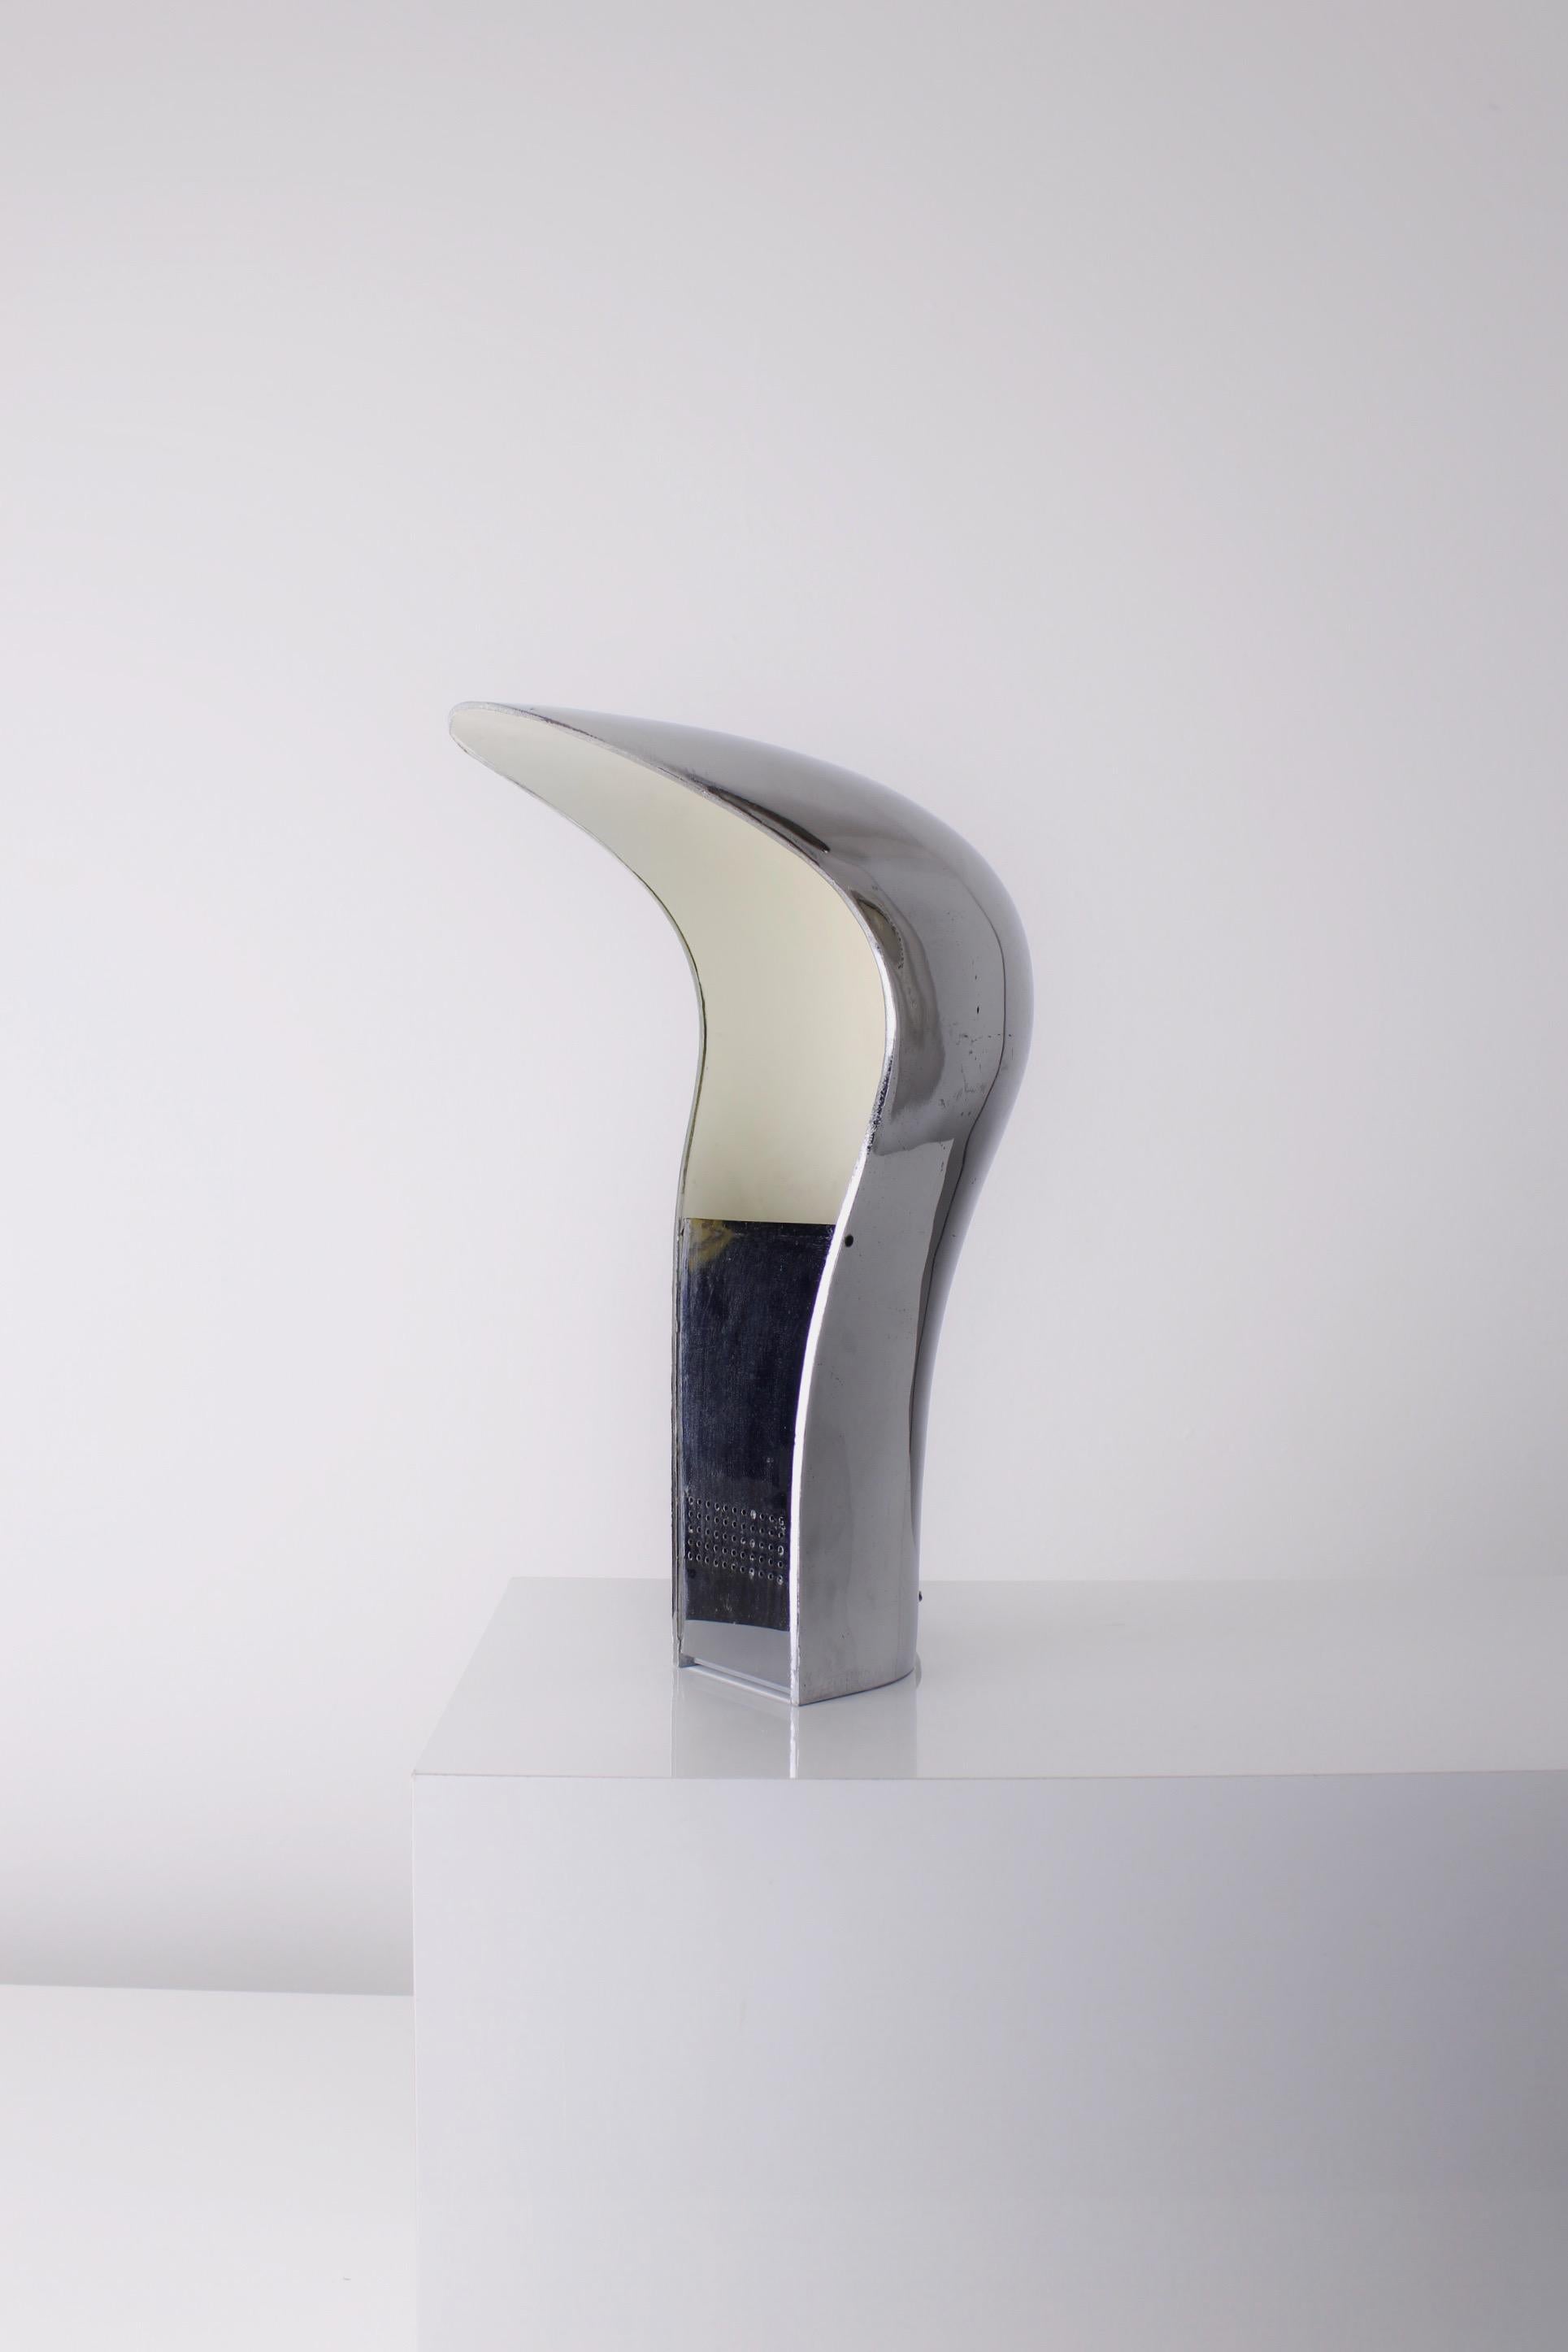 Table lamp, model Pelota. Designed by Cesare Casati & Emanuele Ponzio in 1971, Casati & Ponzio founded Studio DA in 1965. They developed projects in various sectors like architecture, urban planning, interior design, exhibition design, and